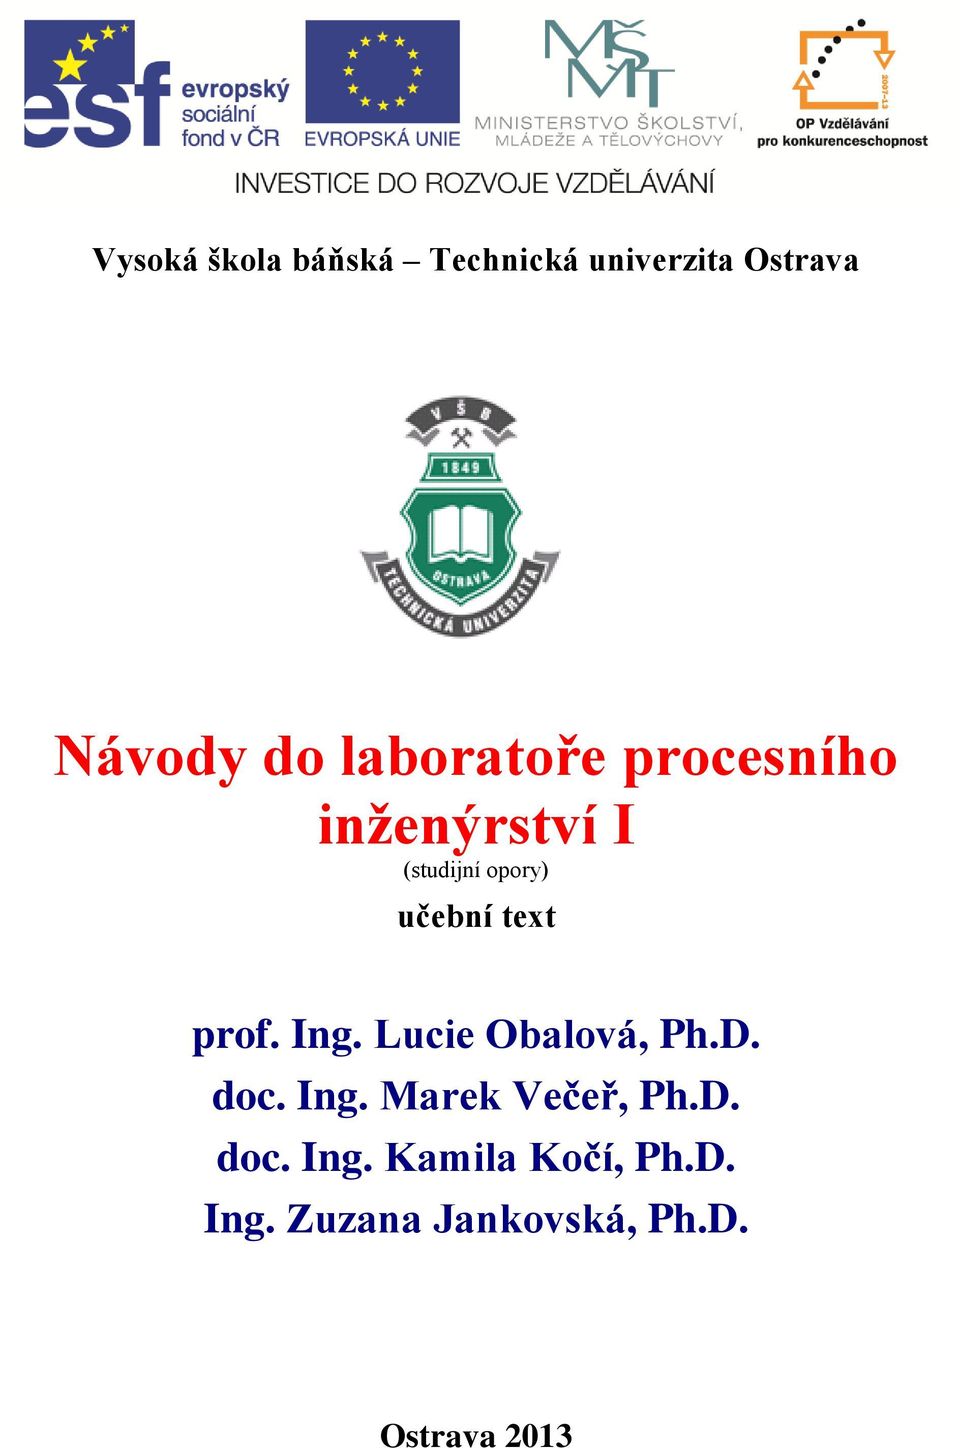 text prof. Ing. Lucie Obalová, Ph.D. doc. Ing. Marek Večeř, Ph.